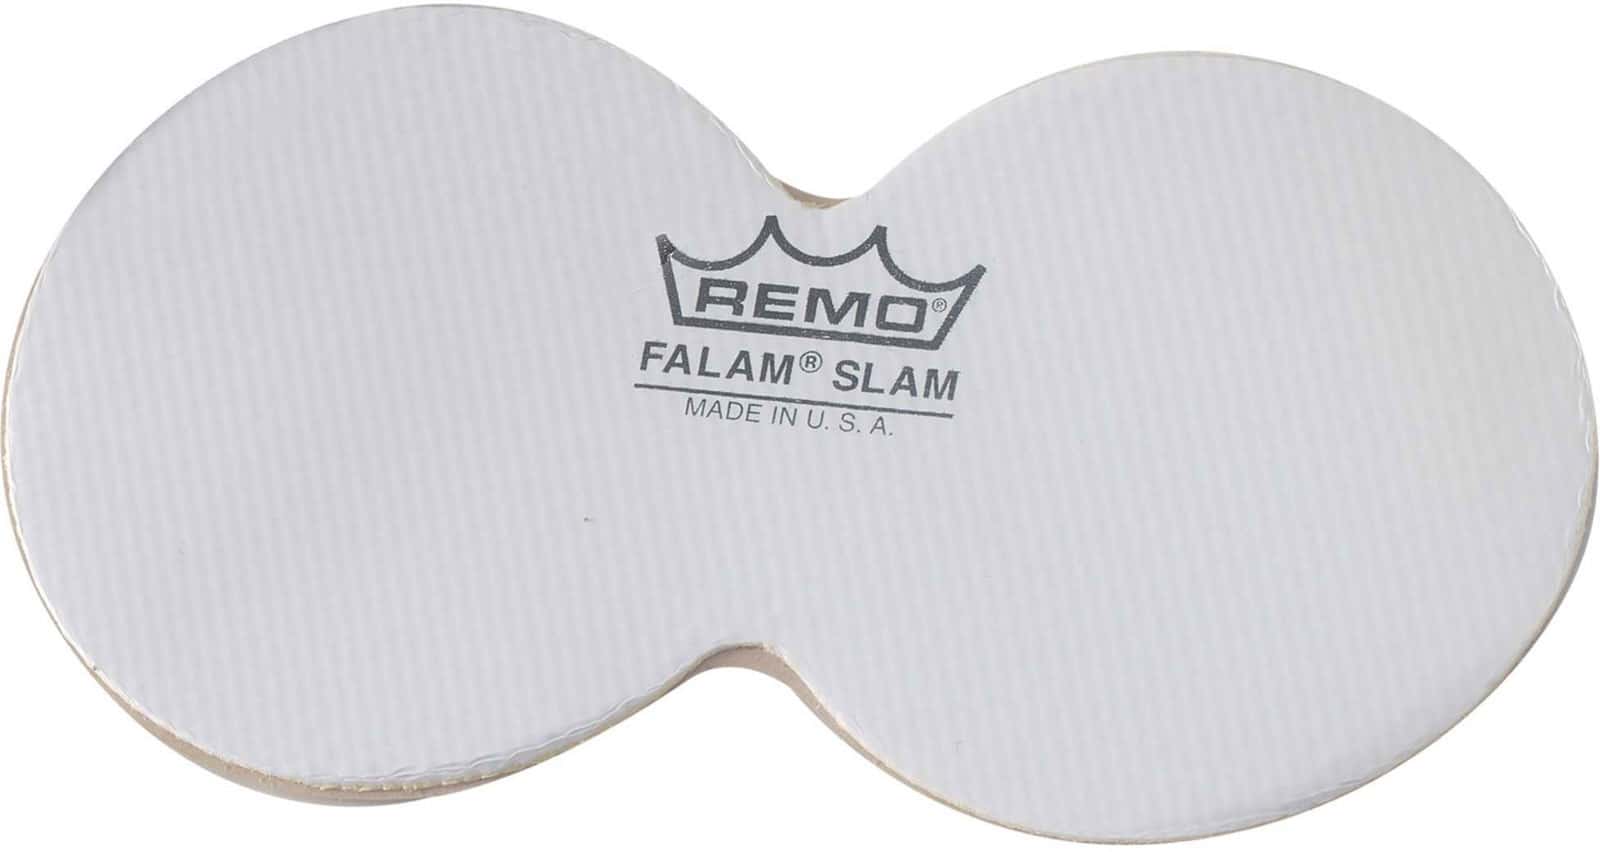 REMO DOUBLE FALAM SLAM - 2.5